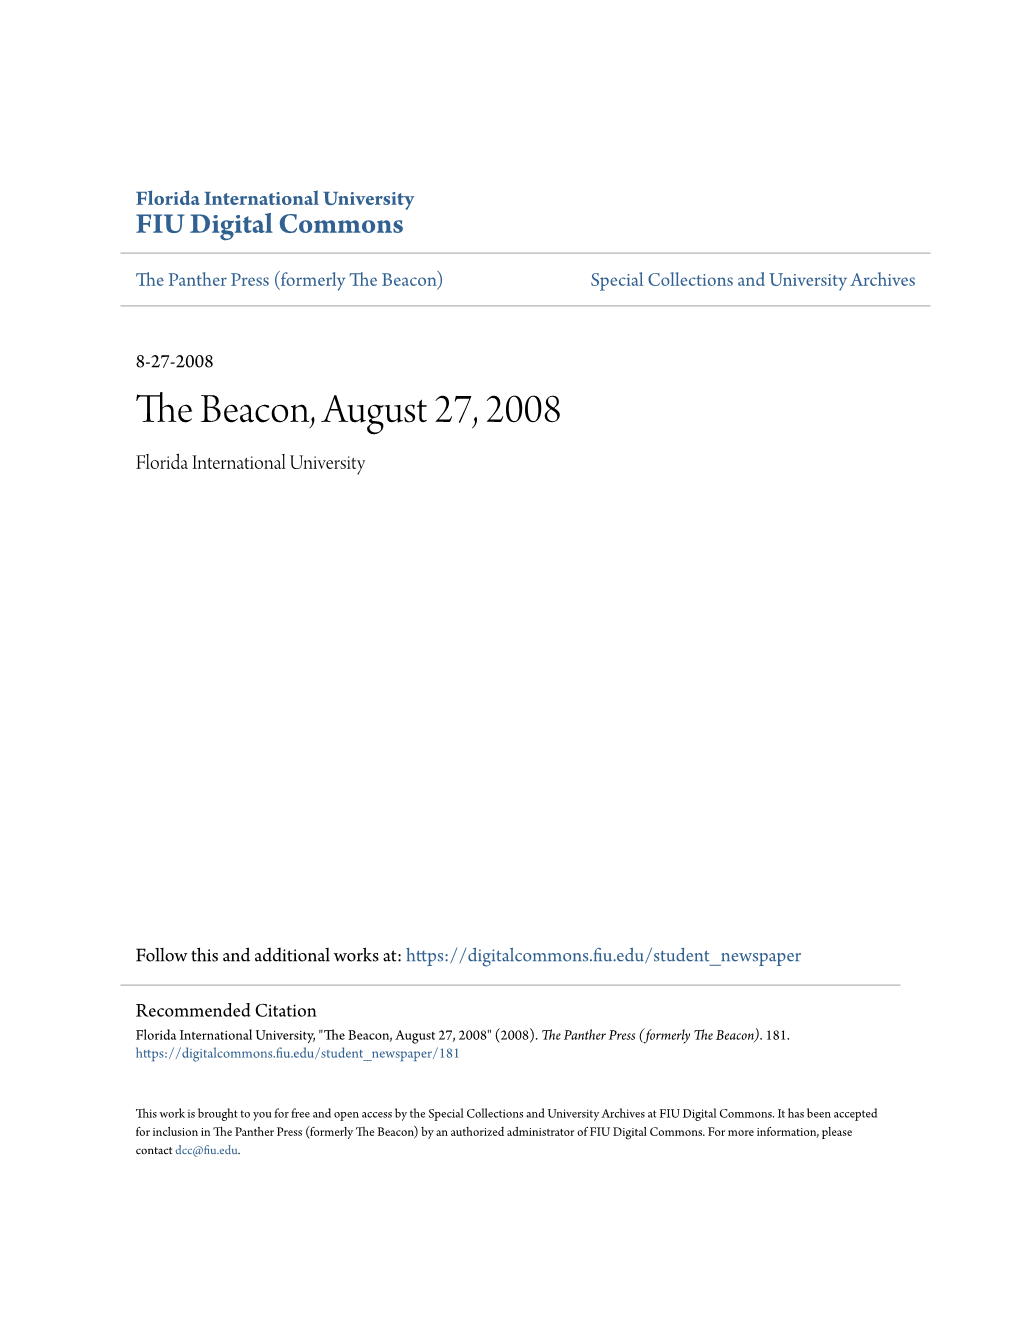 The Beacon, August 27, 2008 Florida International University